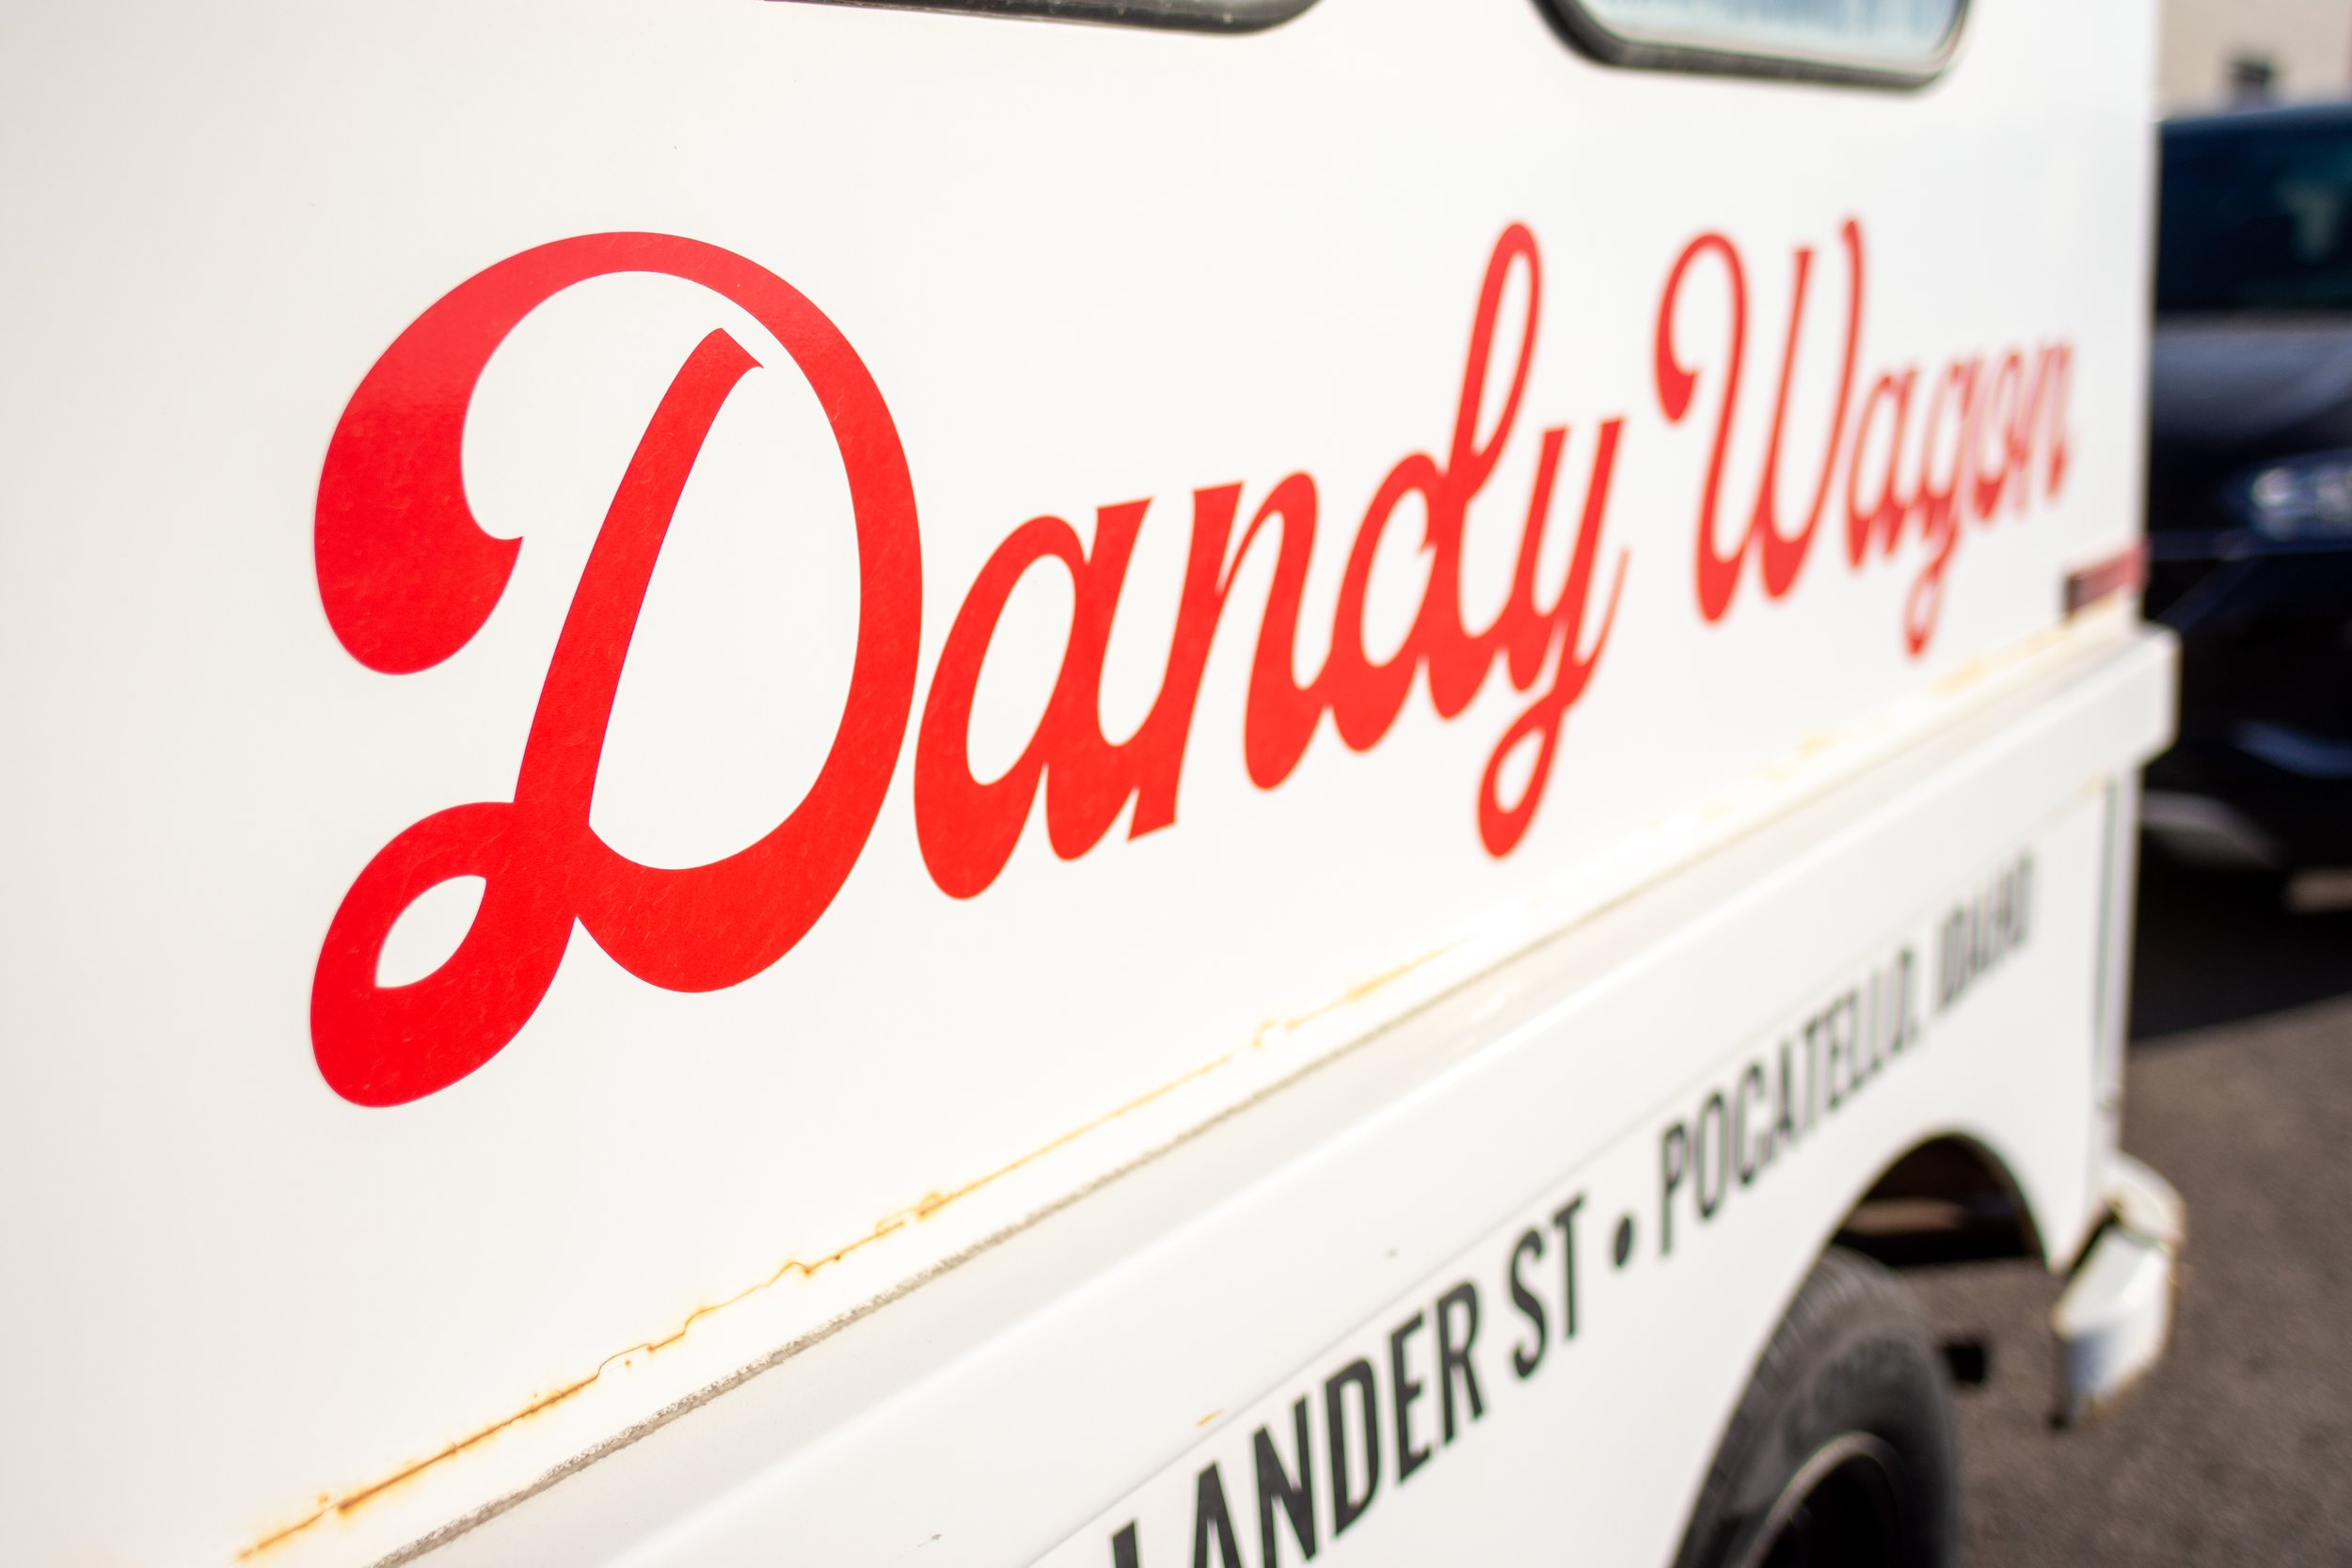  The bewery’s “Dandy Wagon” 